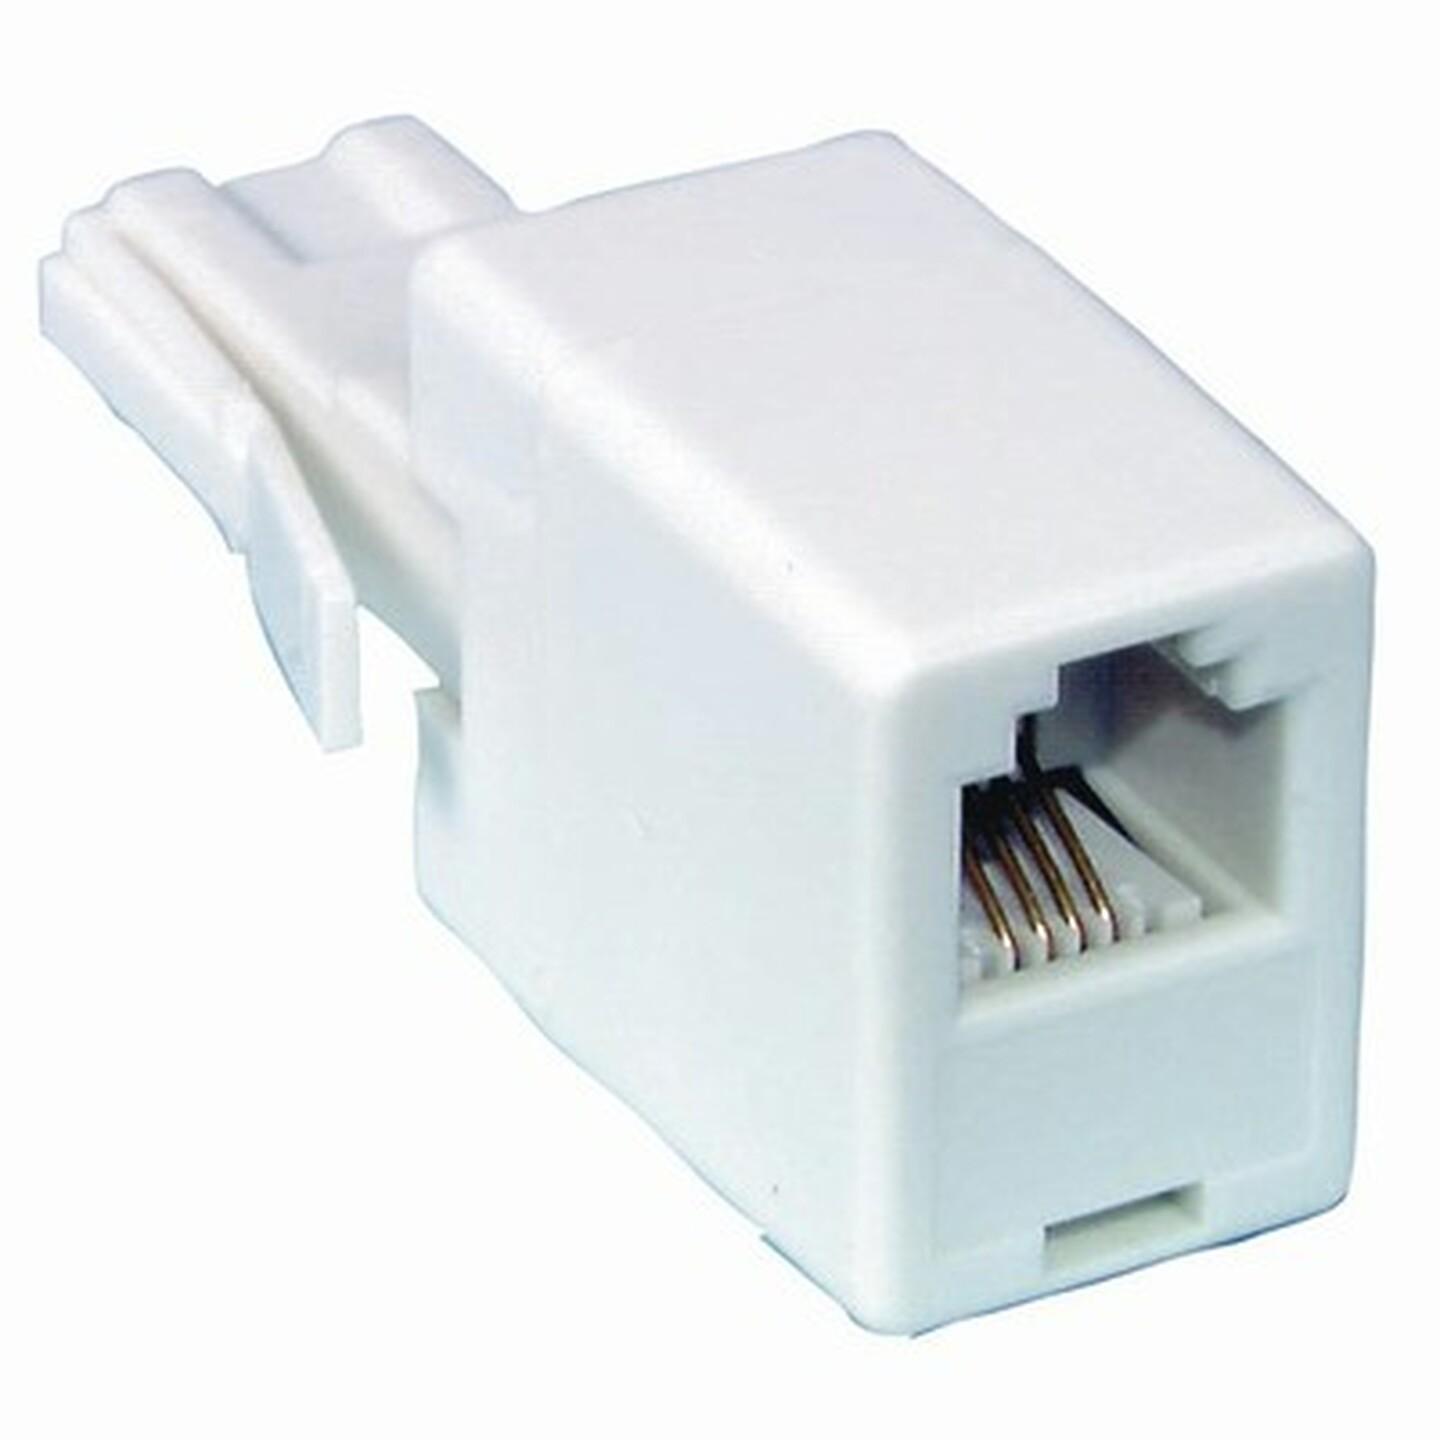 RJ11 Socket to NZ Telephone Plug Adaptor